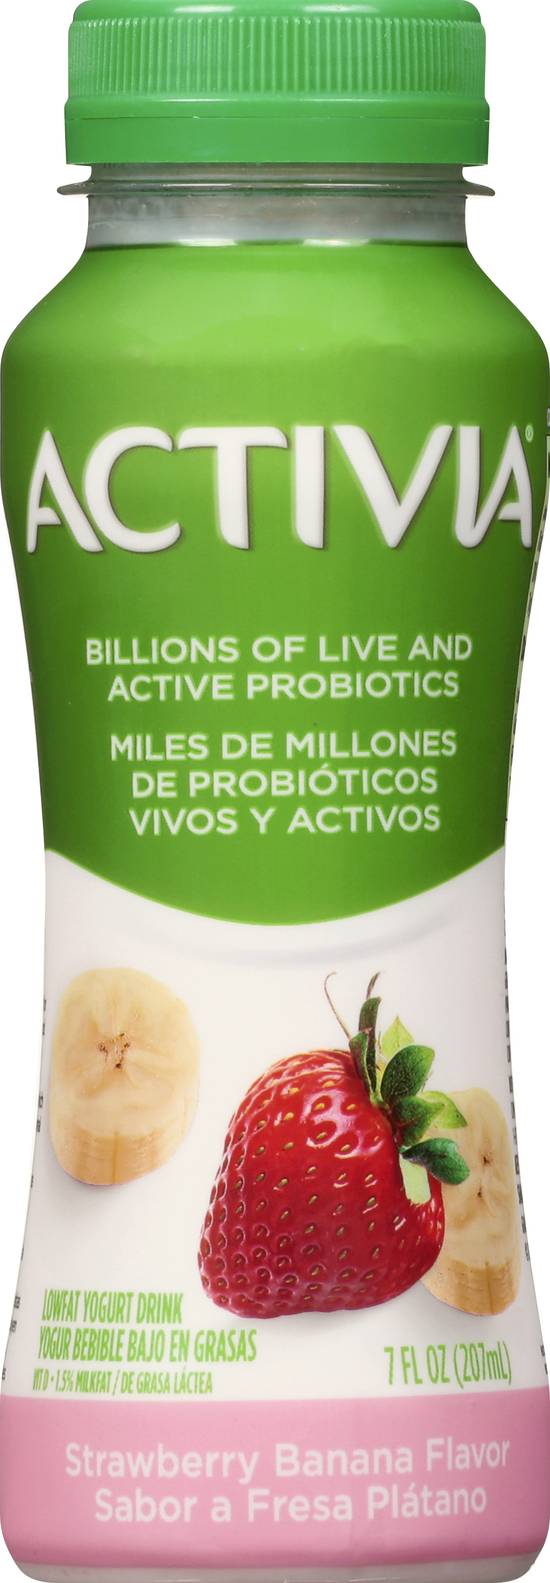 Activia Probiotic Lowfat Yogurt Drink (strawberry-banana)